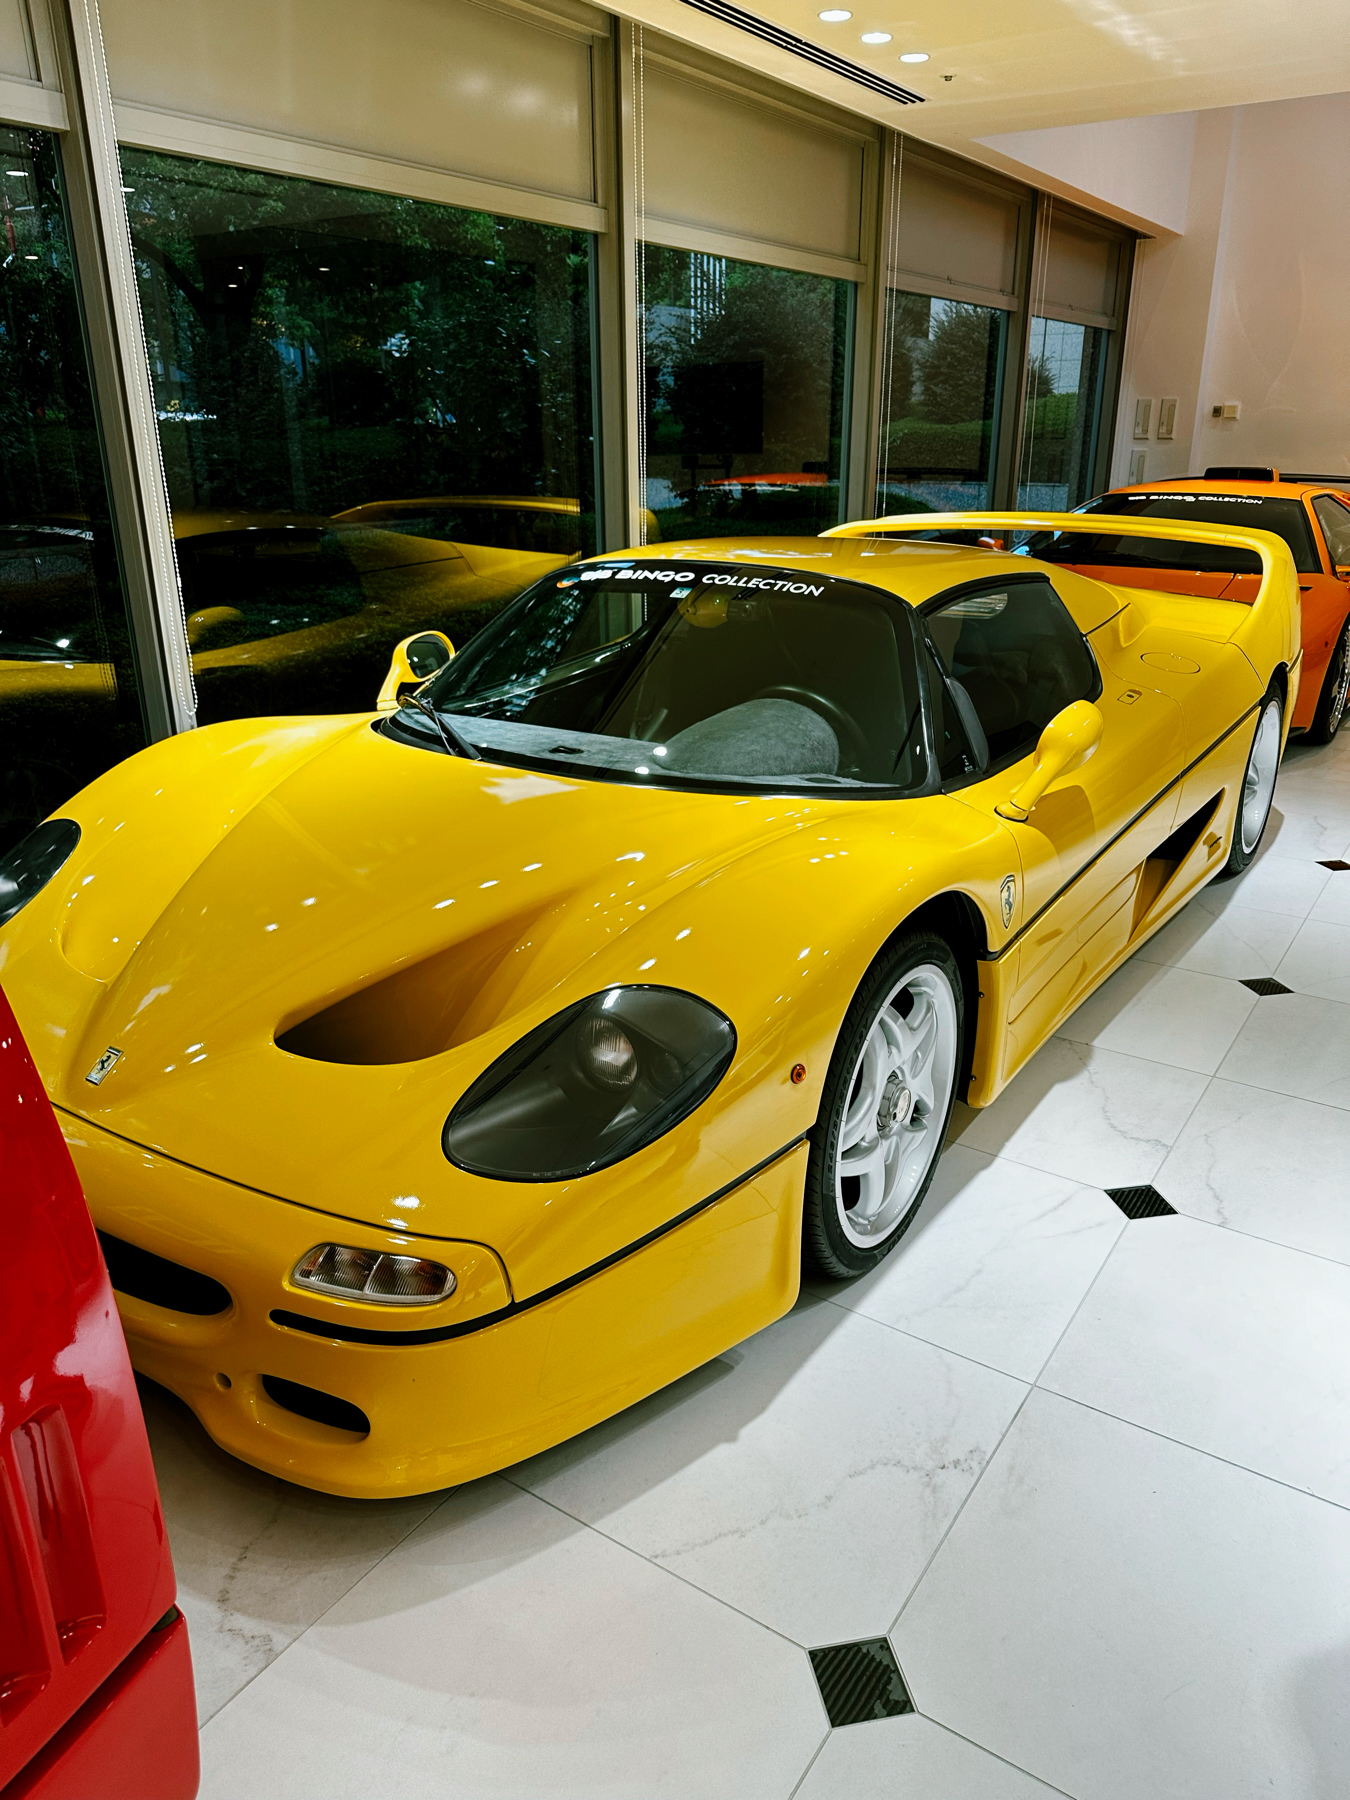 A bright yellow Ferrari F50 supercar shining in a showroom